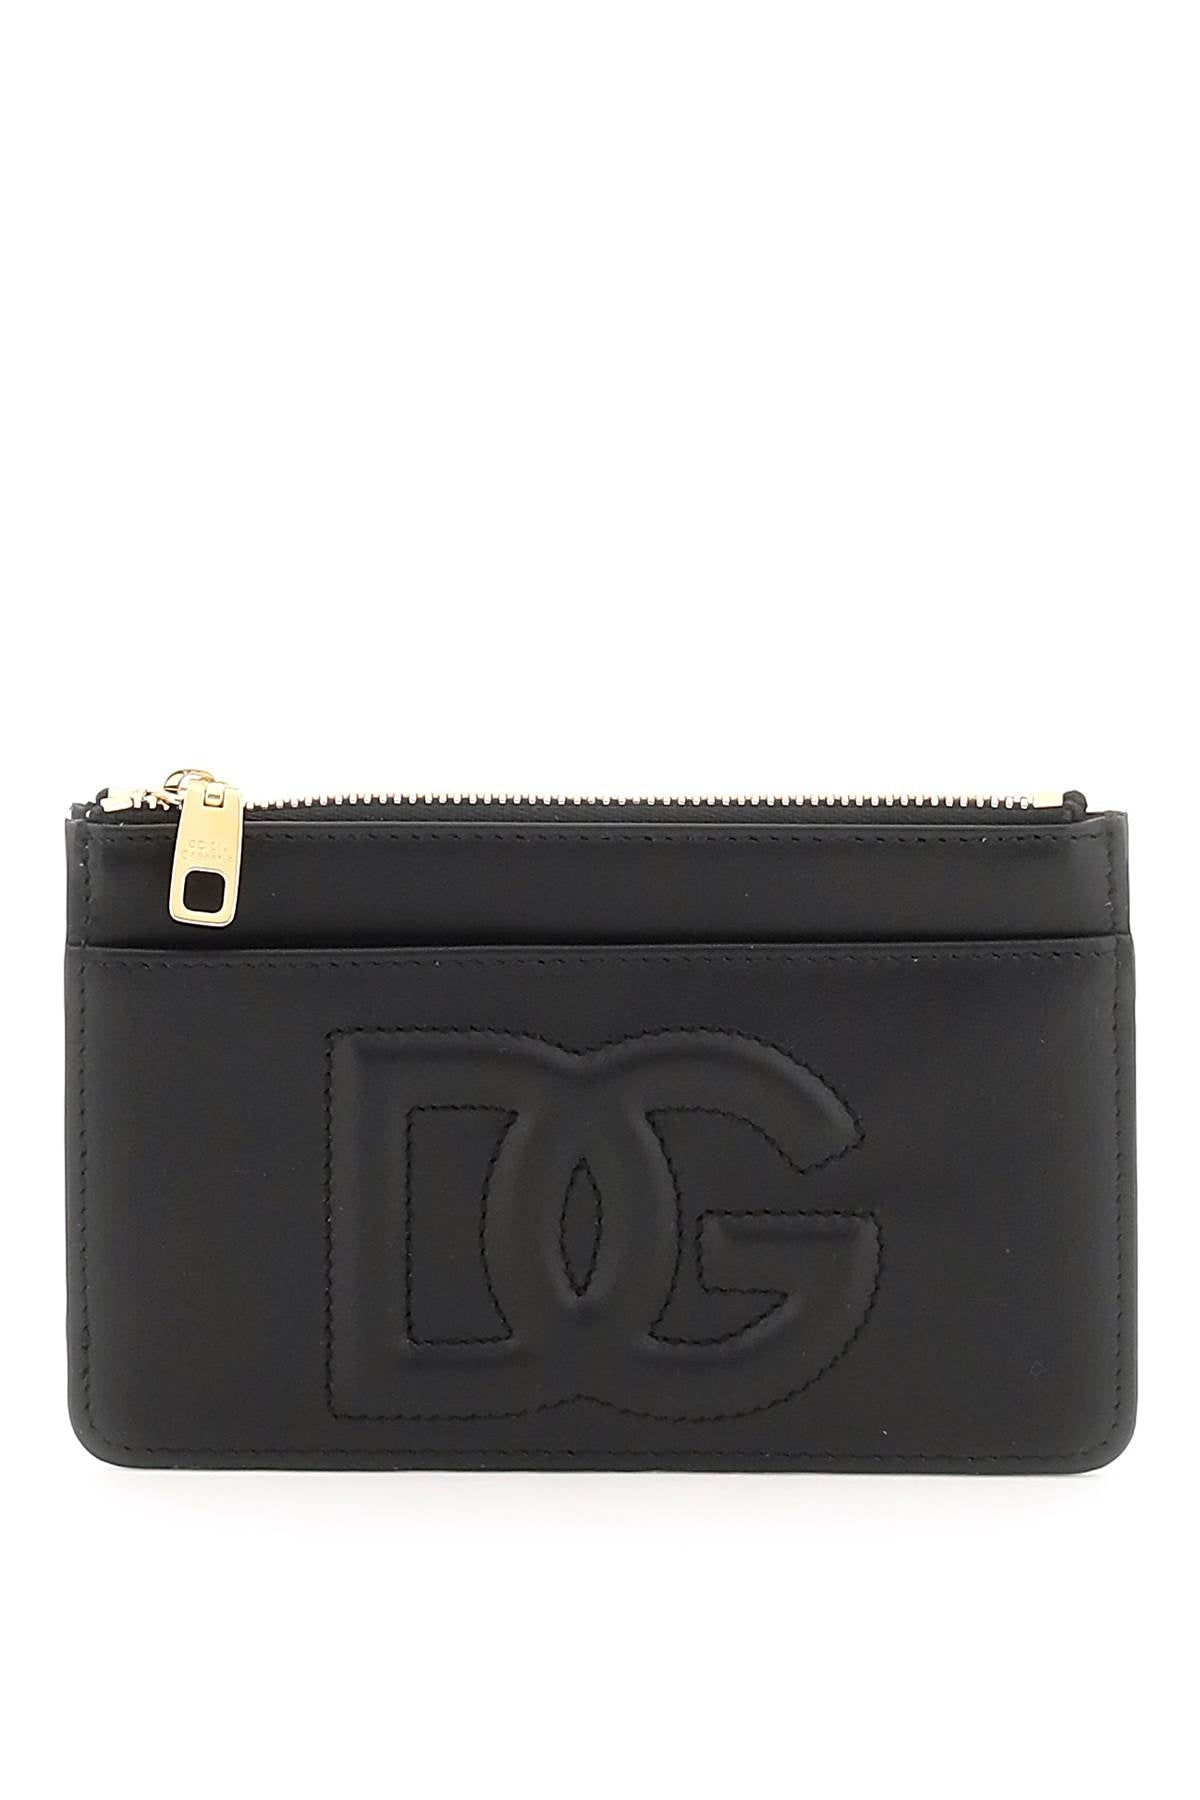 Dolce & Gabbana Logoed Cardholder   Black